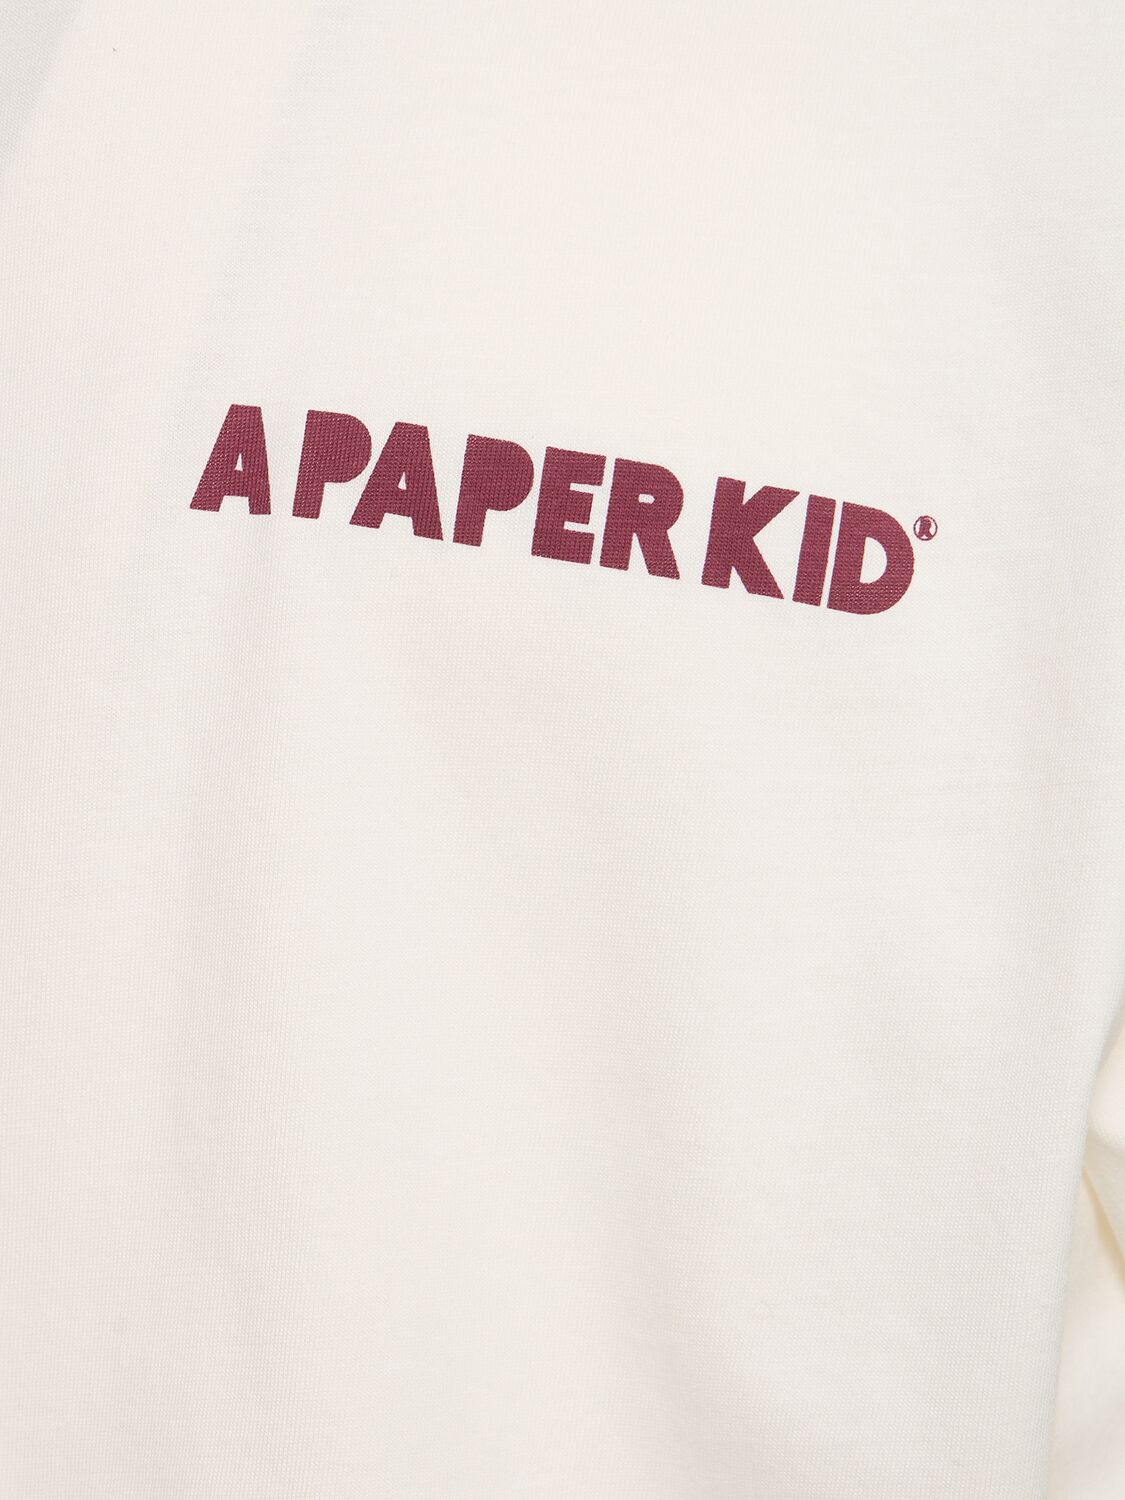 Shop A Paper Kid Unisex T-shirt In Crema